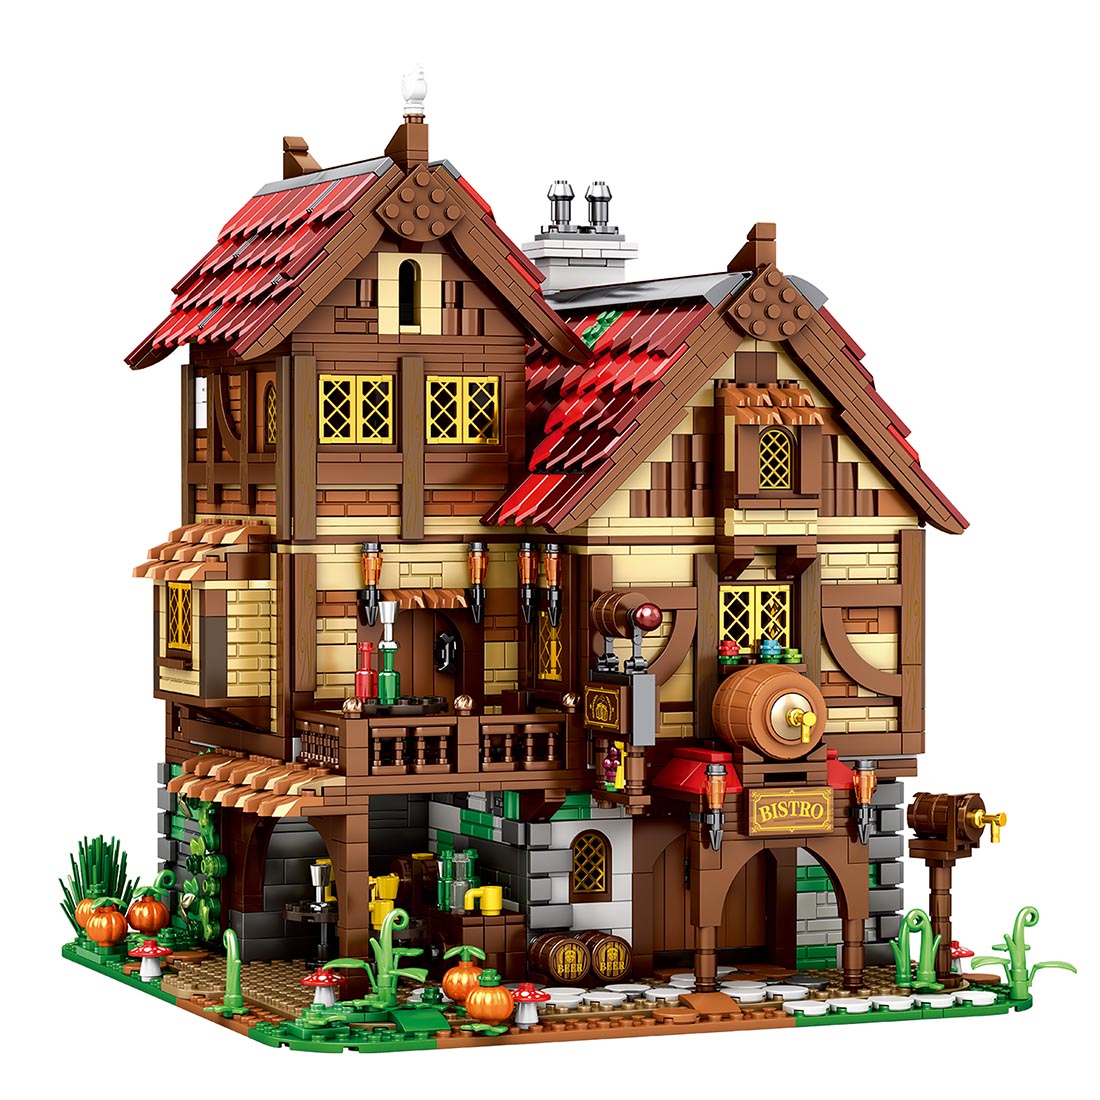 Medieval Wine Shop Model Assembly Toy Building Blocks Set (2831PCS)